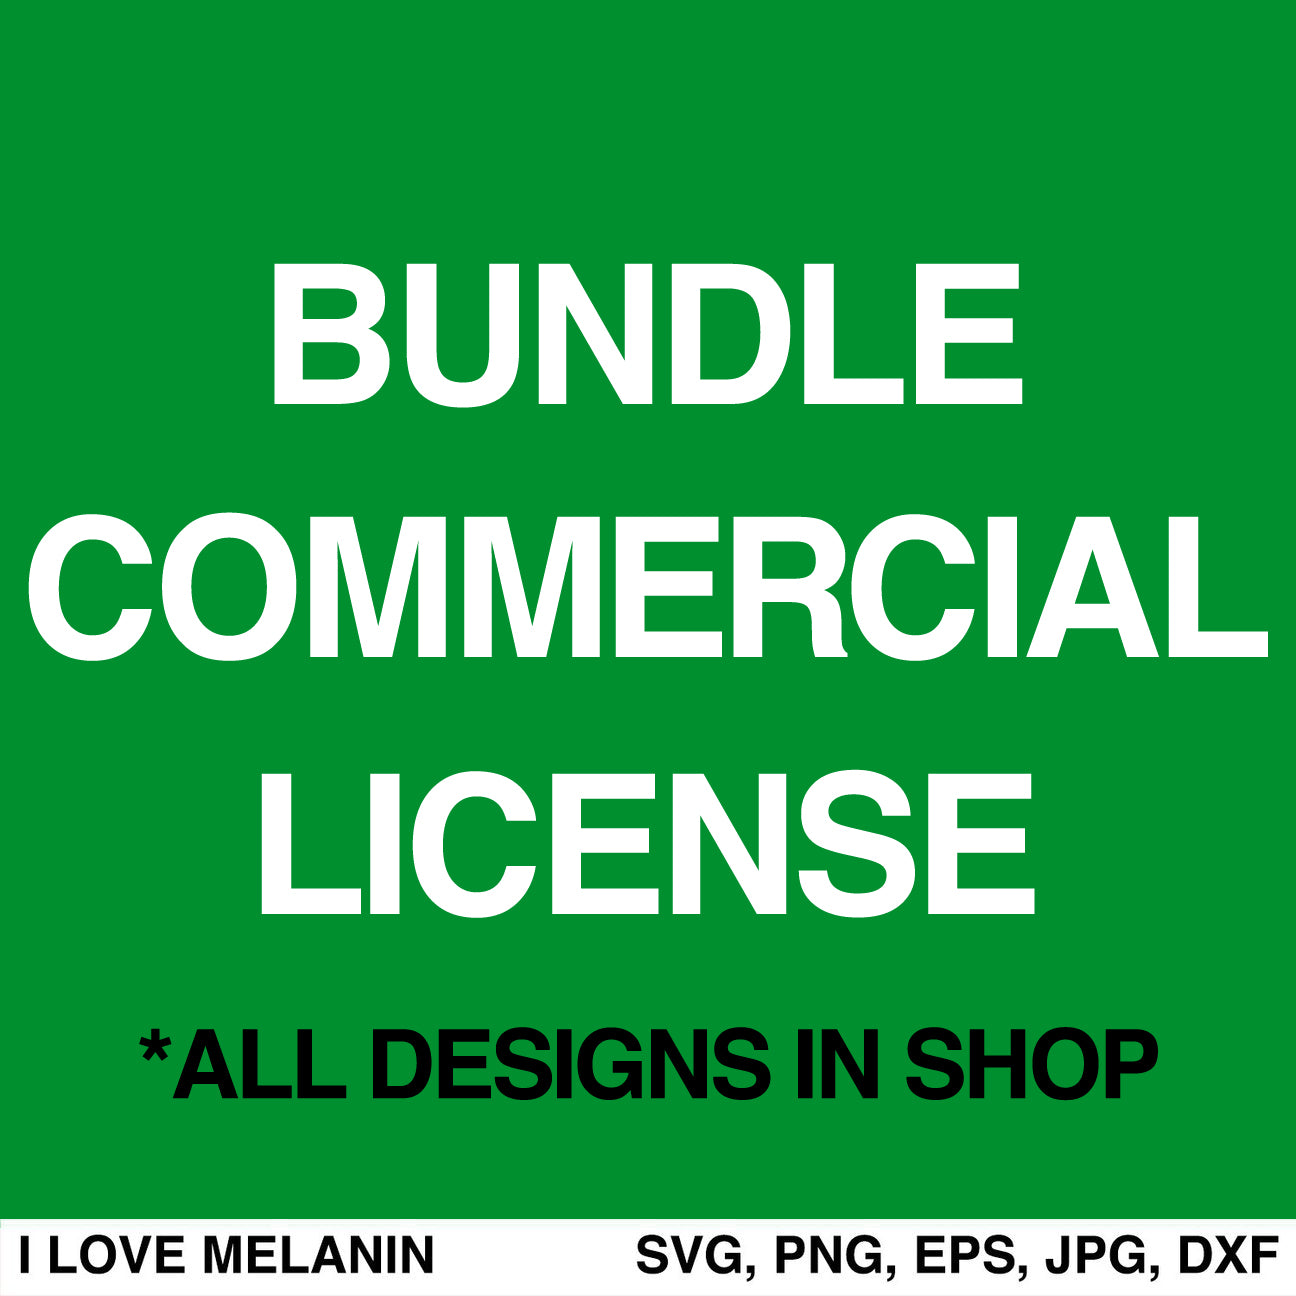 Bundle Commercial License